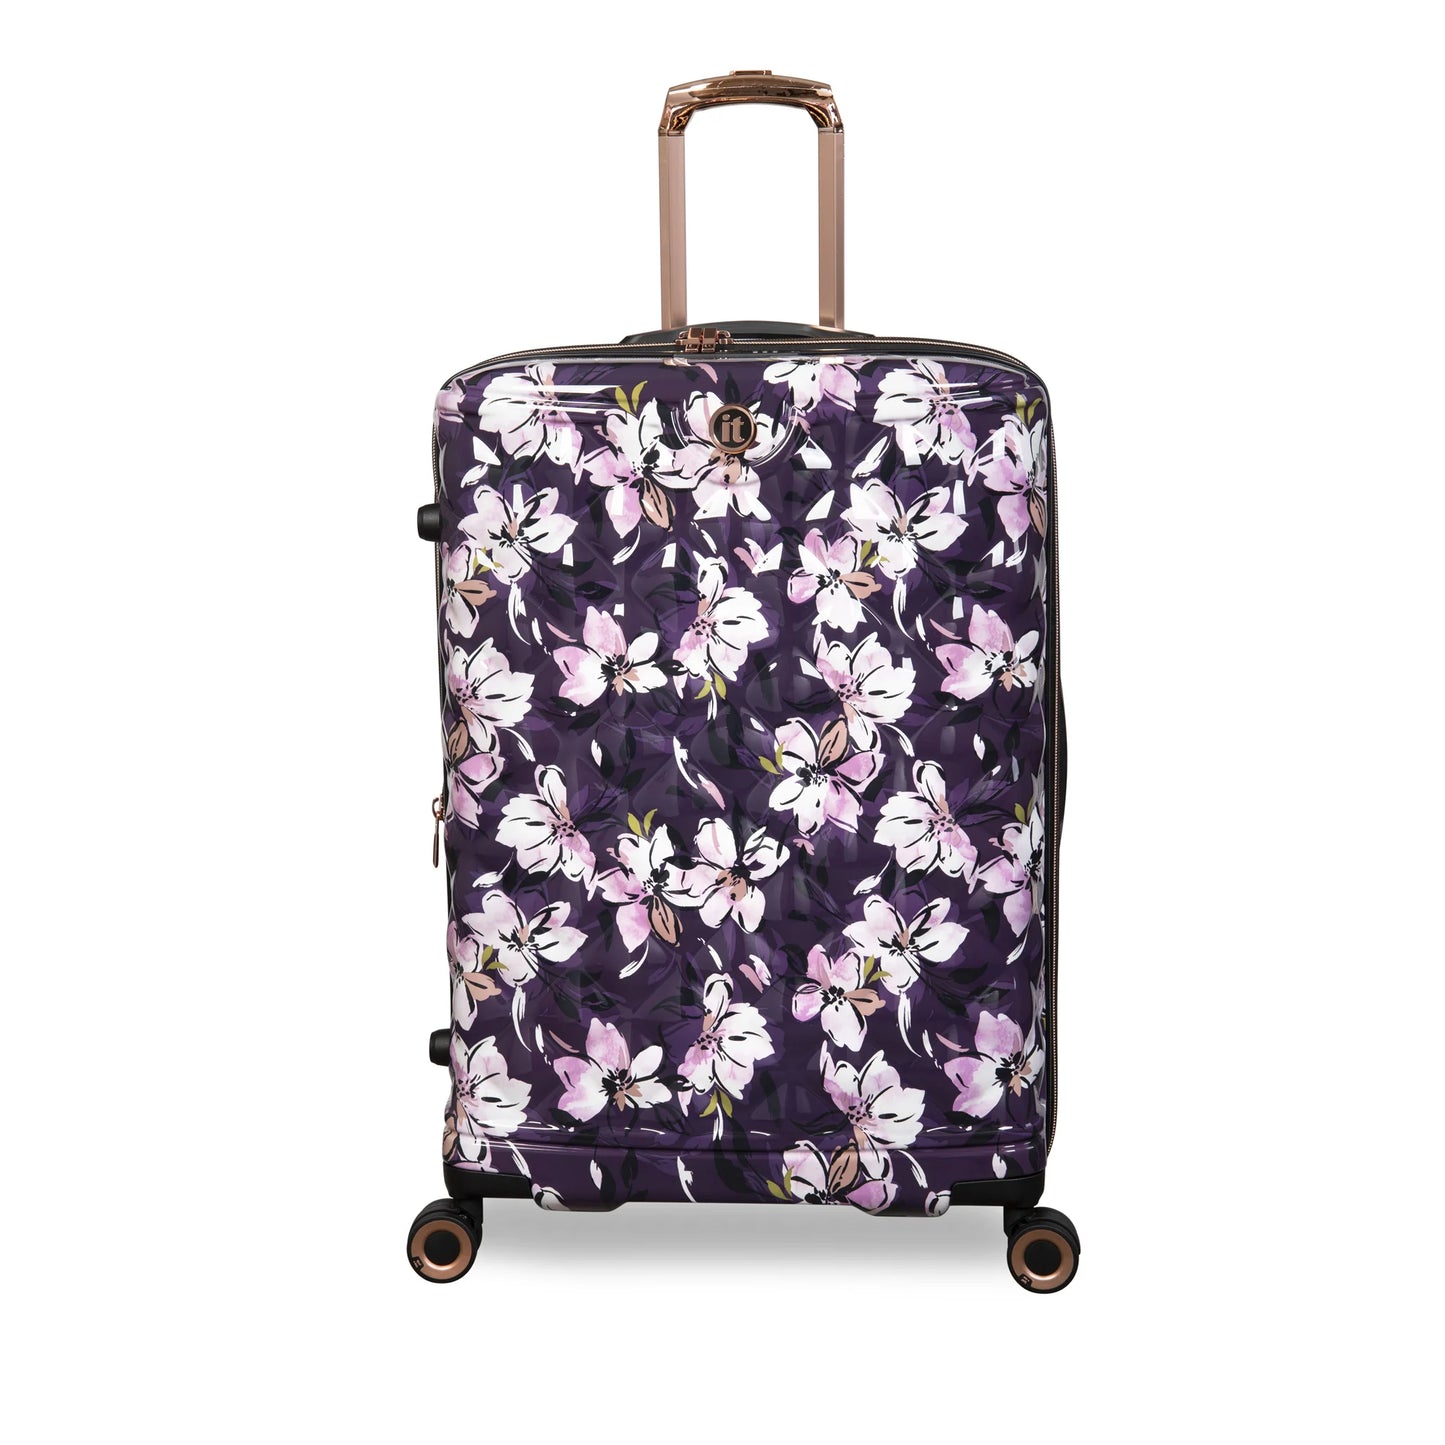 It Luggage Indulging - 4pc Set (Camellia Floral Purple Berry)